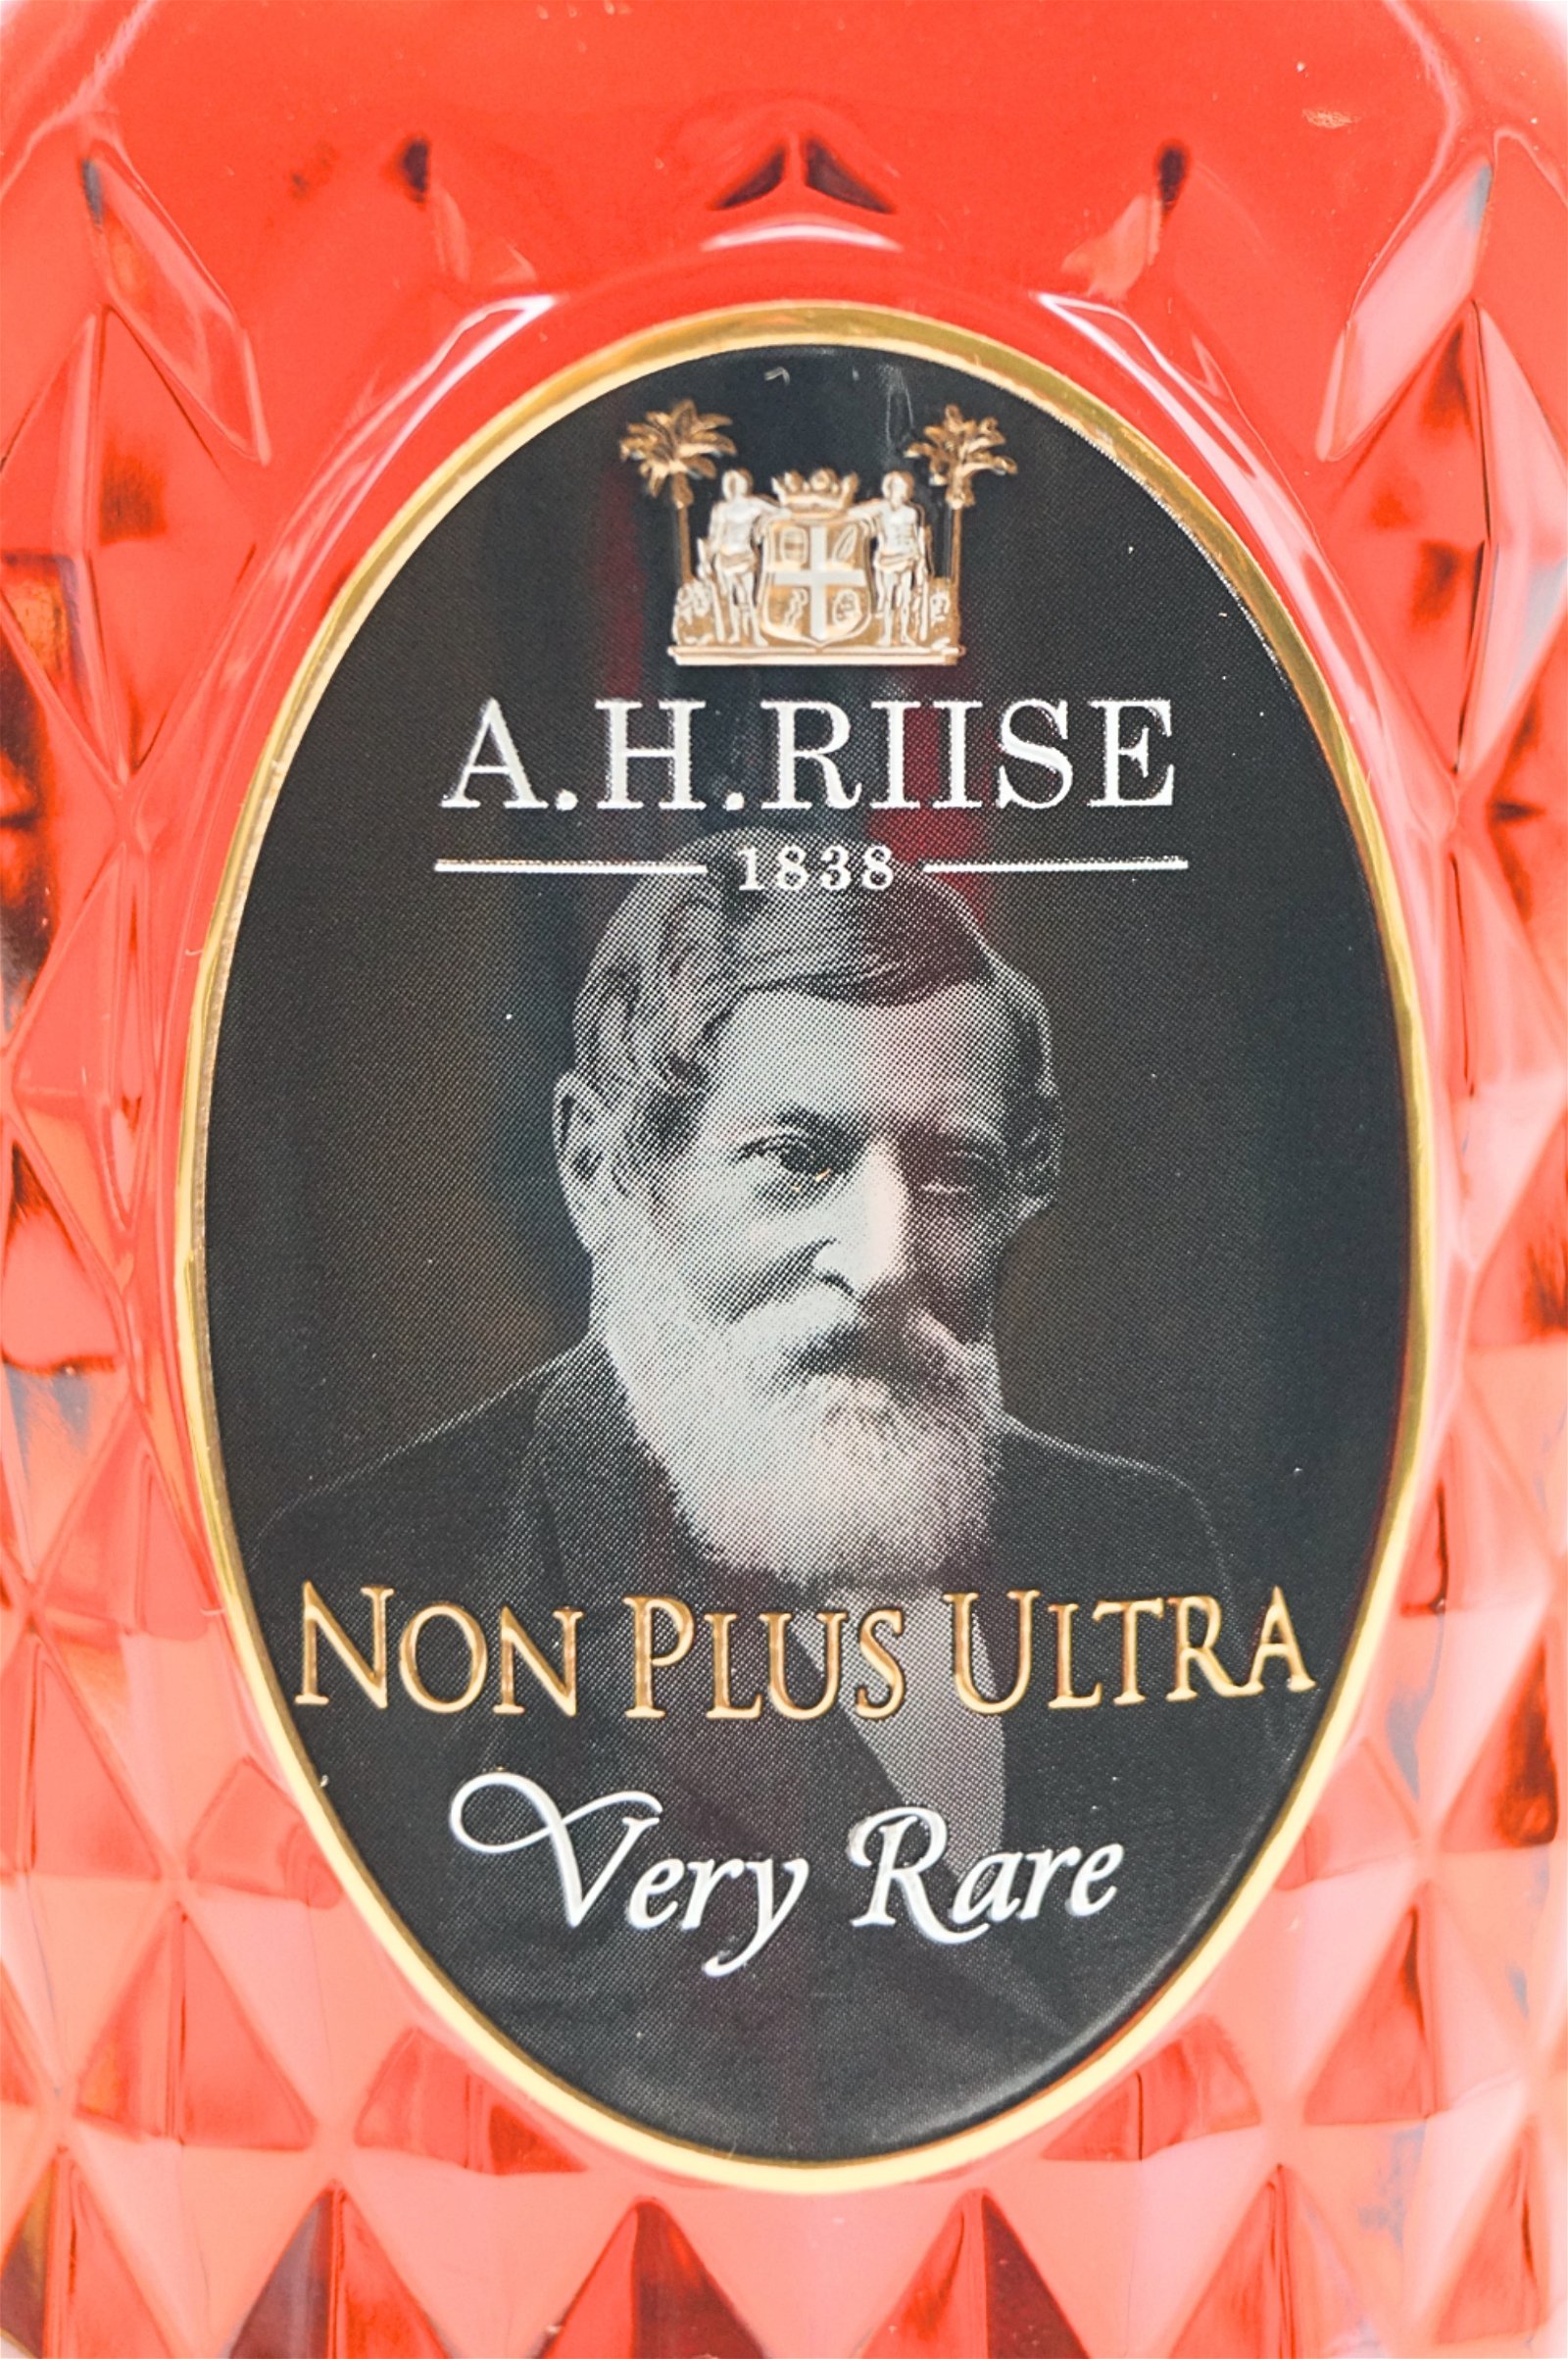 A.H.Riise Non Plus Ultra Very Rare Rum